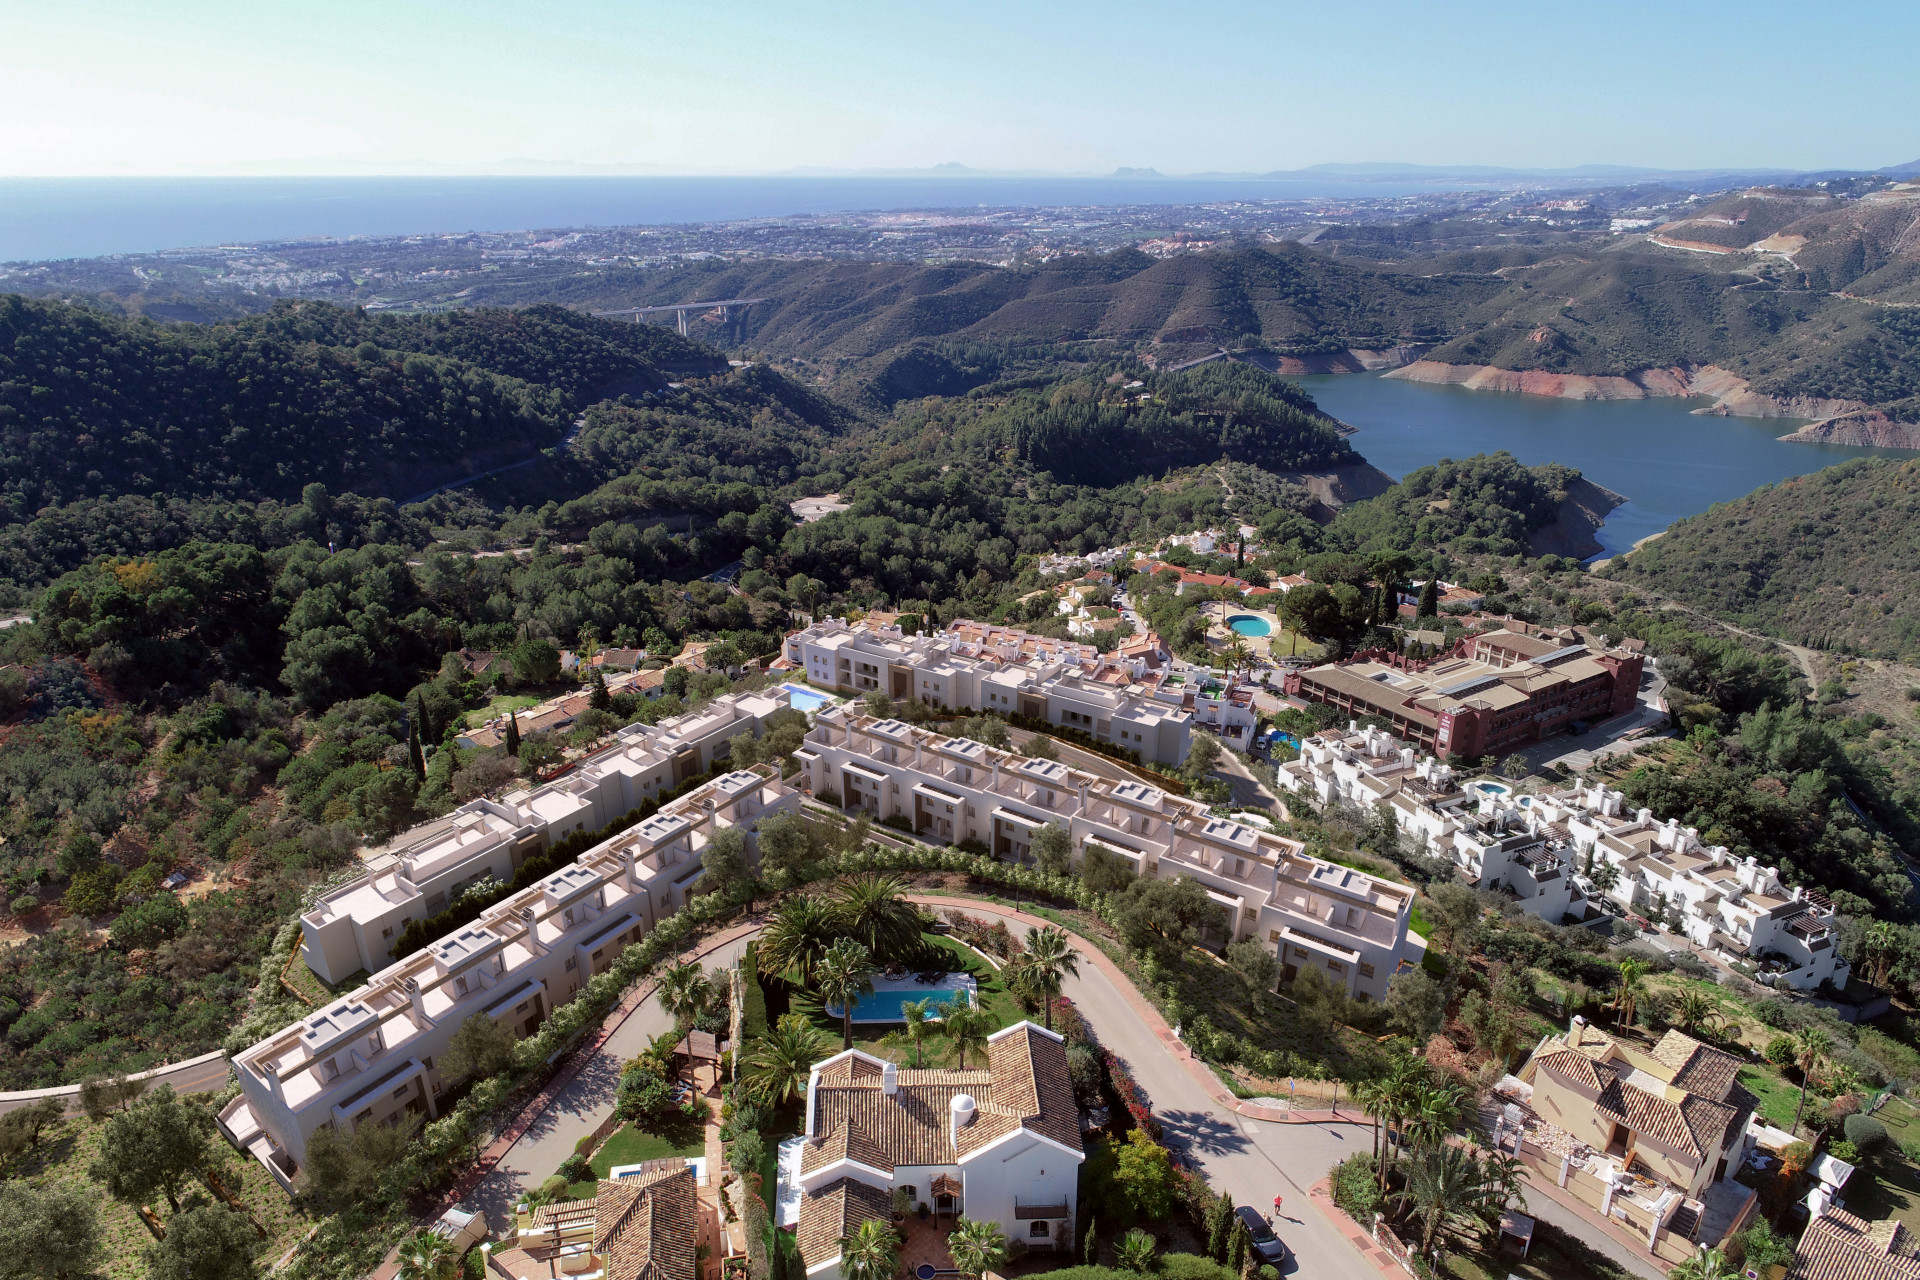 Almazara Views: Exclusive Townhouses in a privileged area of Marbella